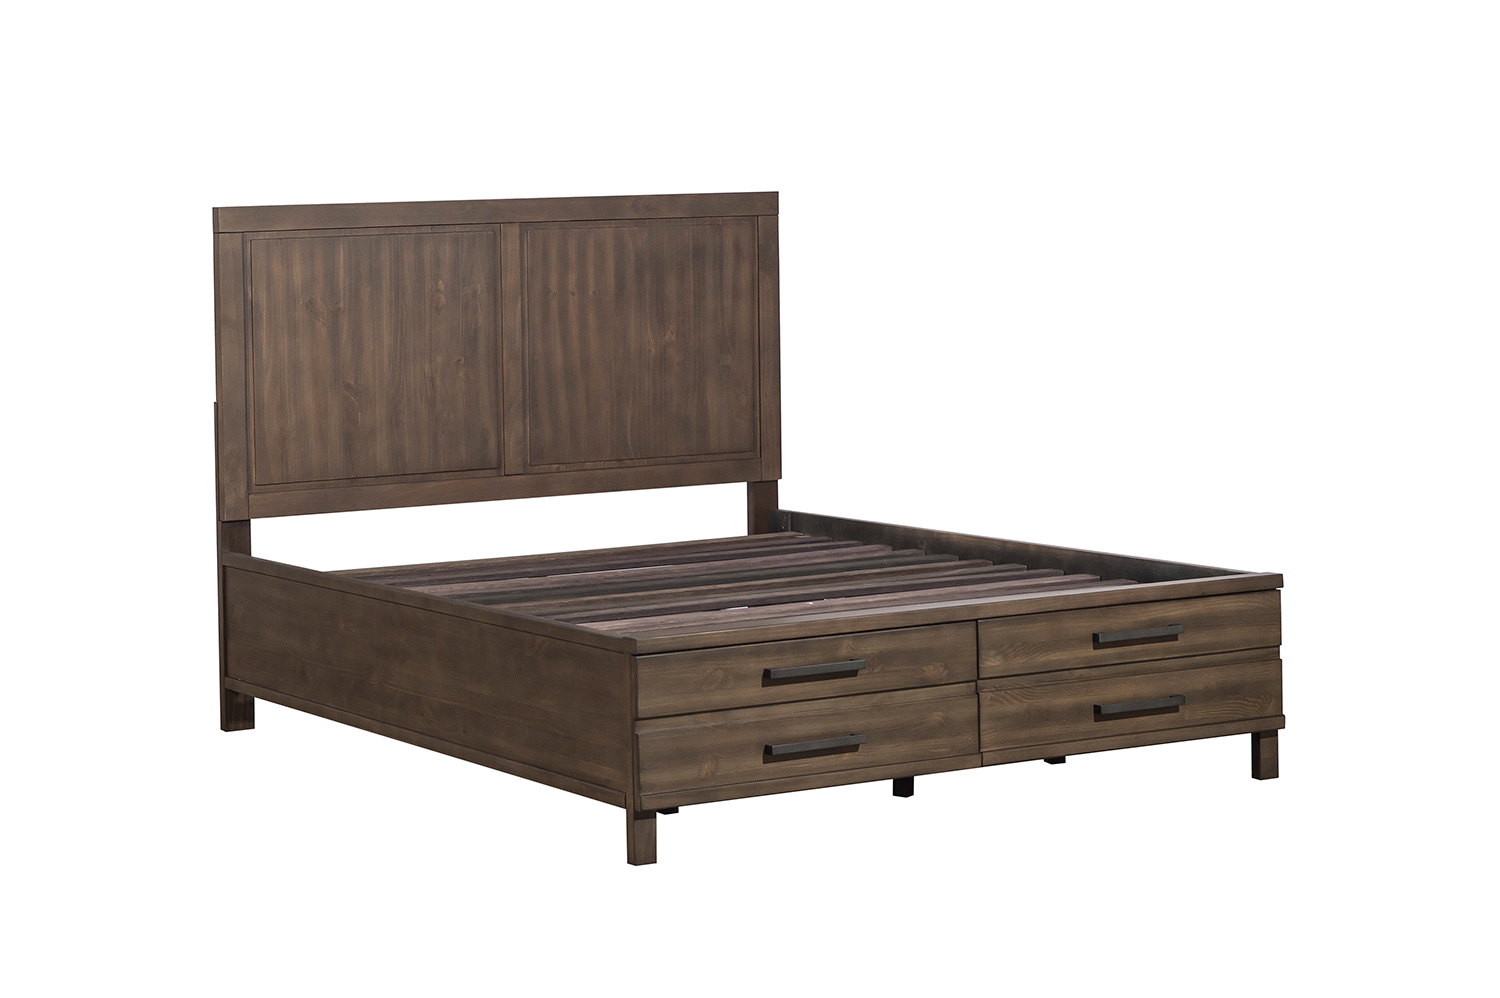 Homelegance Bracco Platform Bed with Footboard Storage - Brown